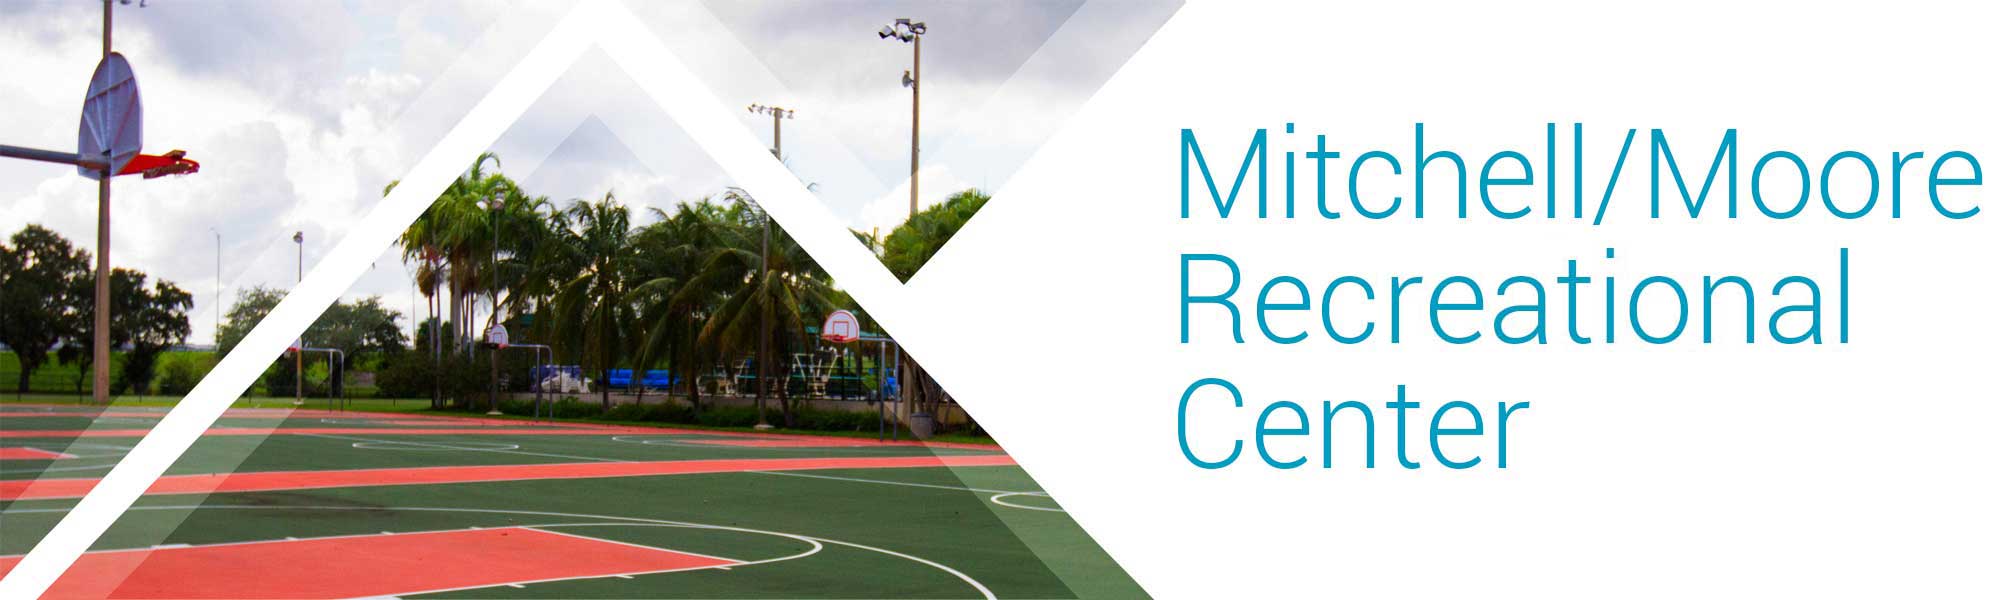 Mitchell Moore Recreation Center